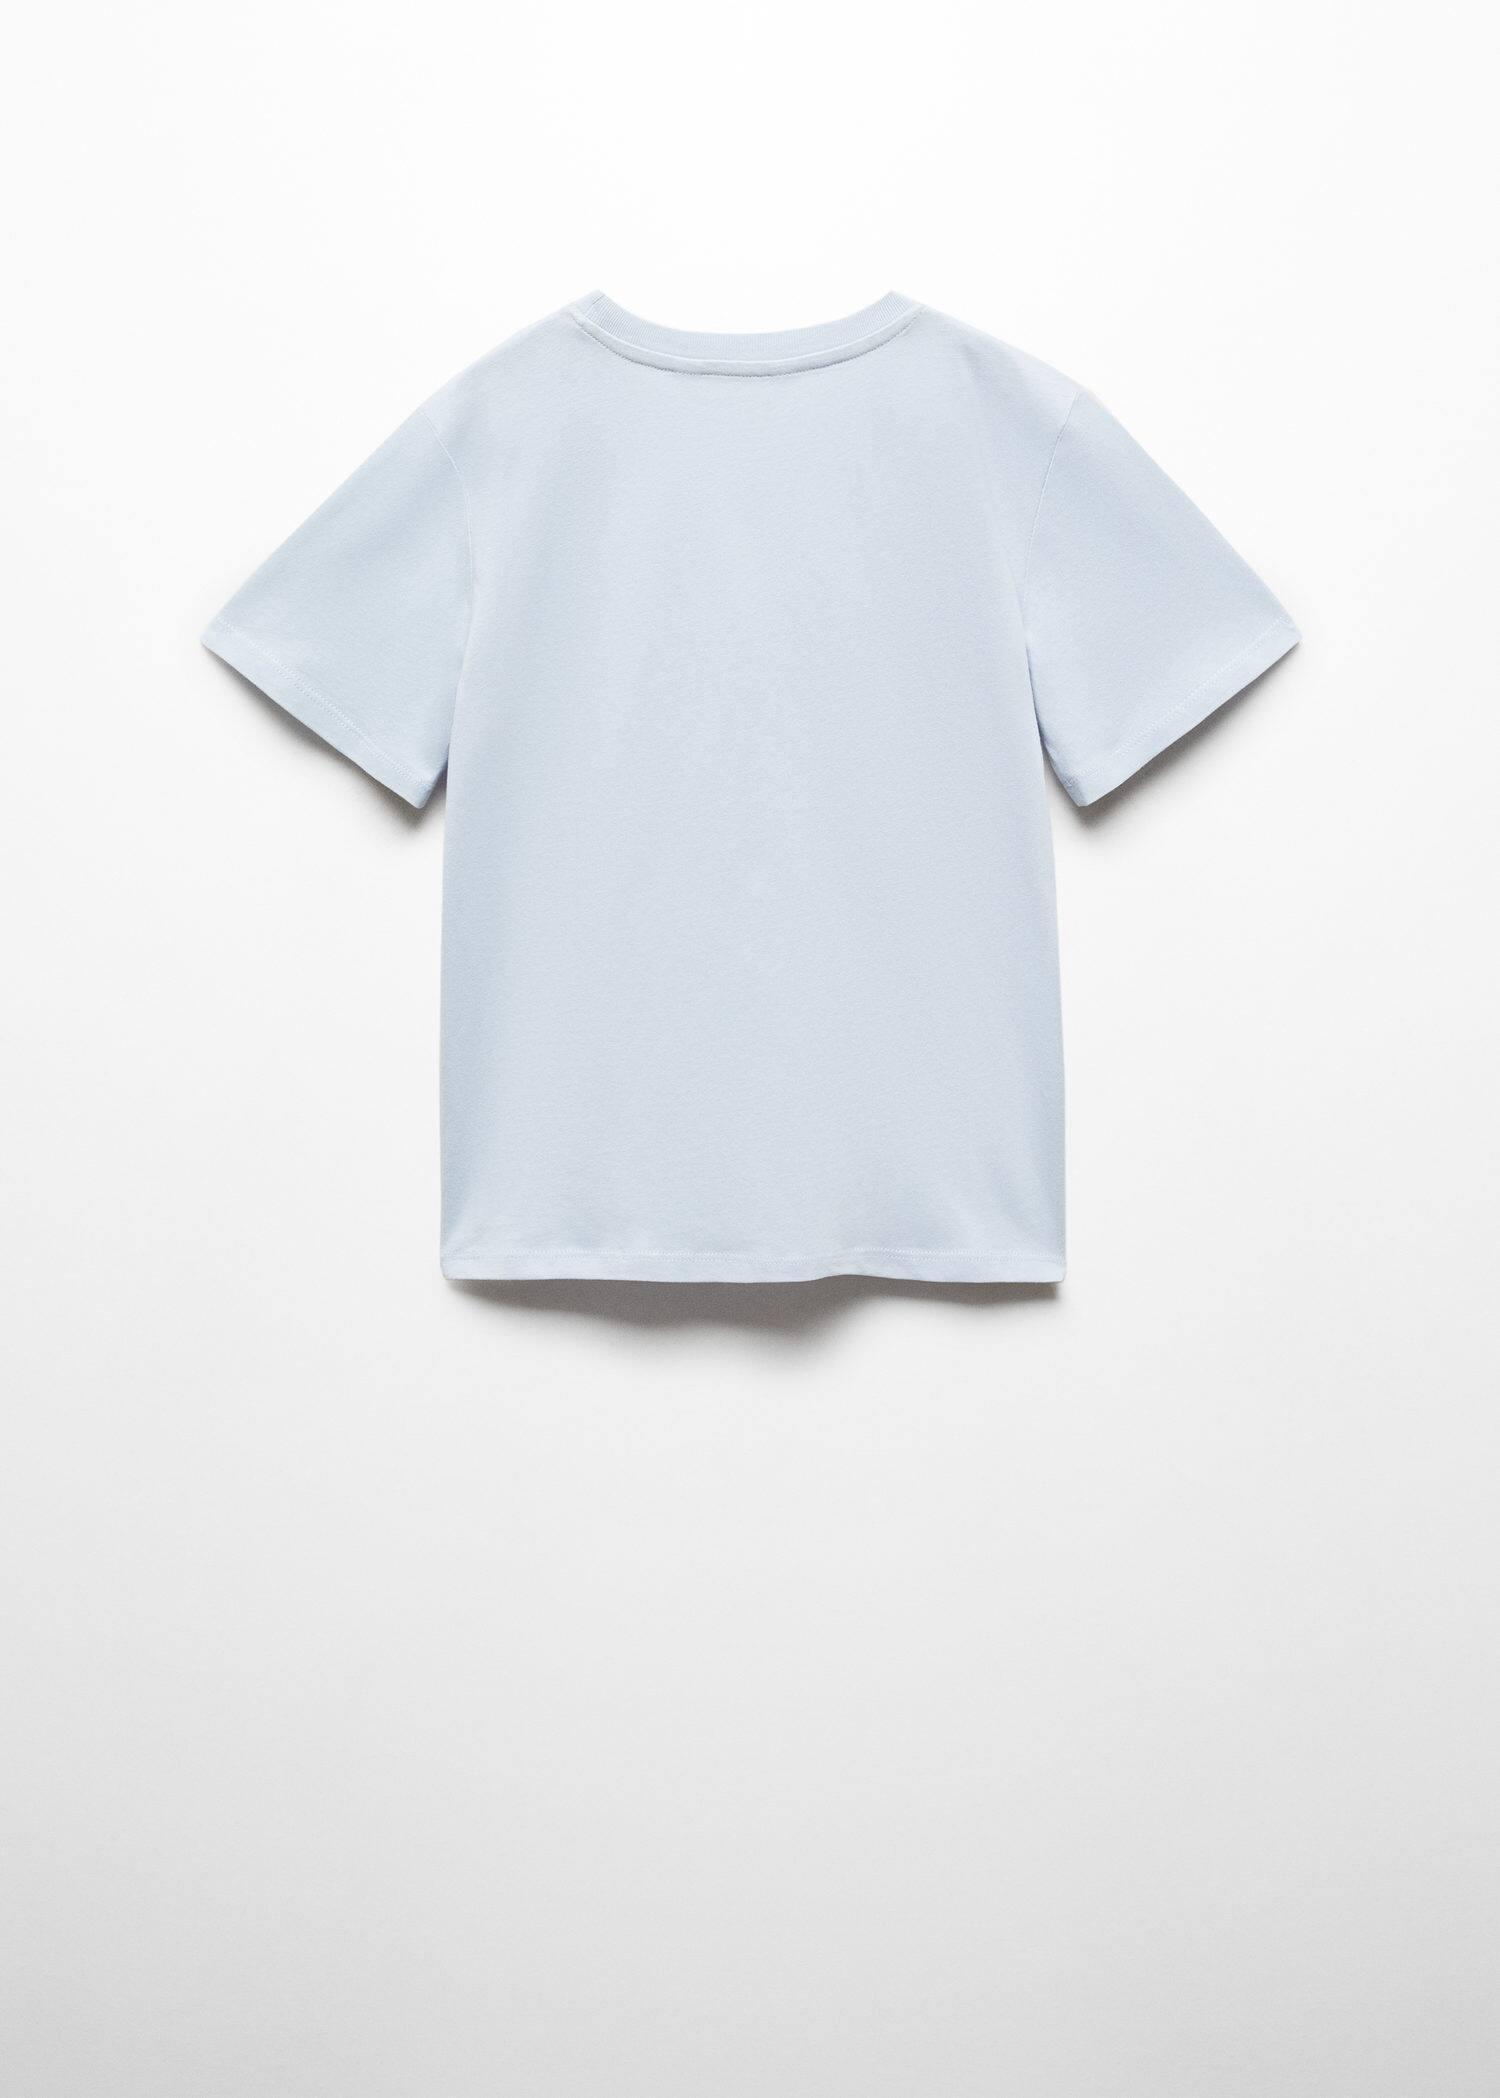 Mango - Blue Essential Cotton-Blend T-Shirt, Kids Boys